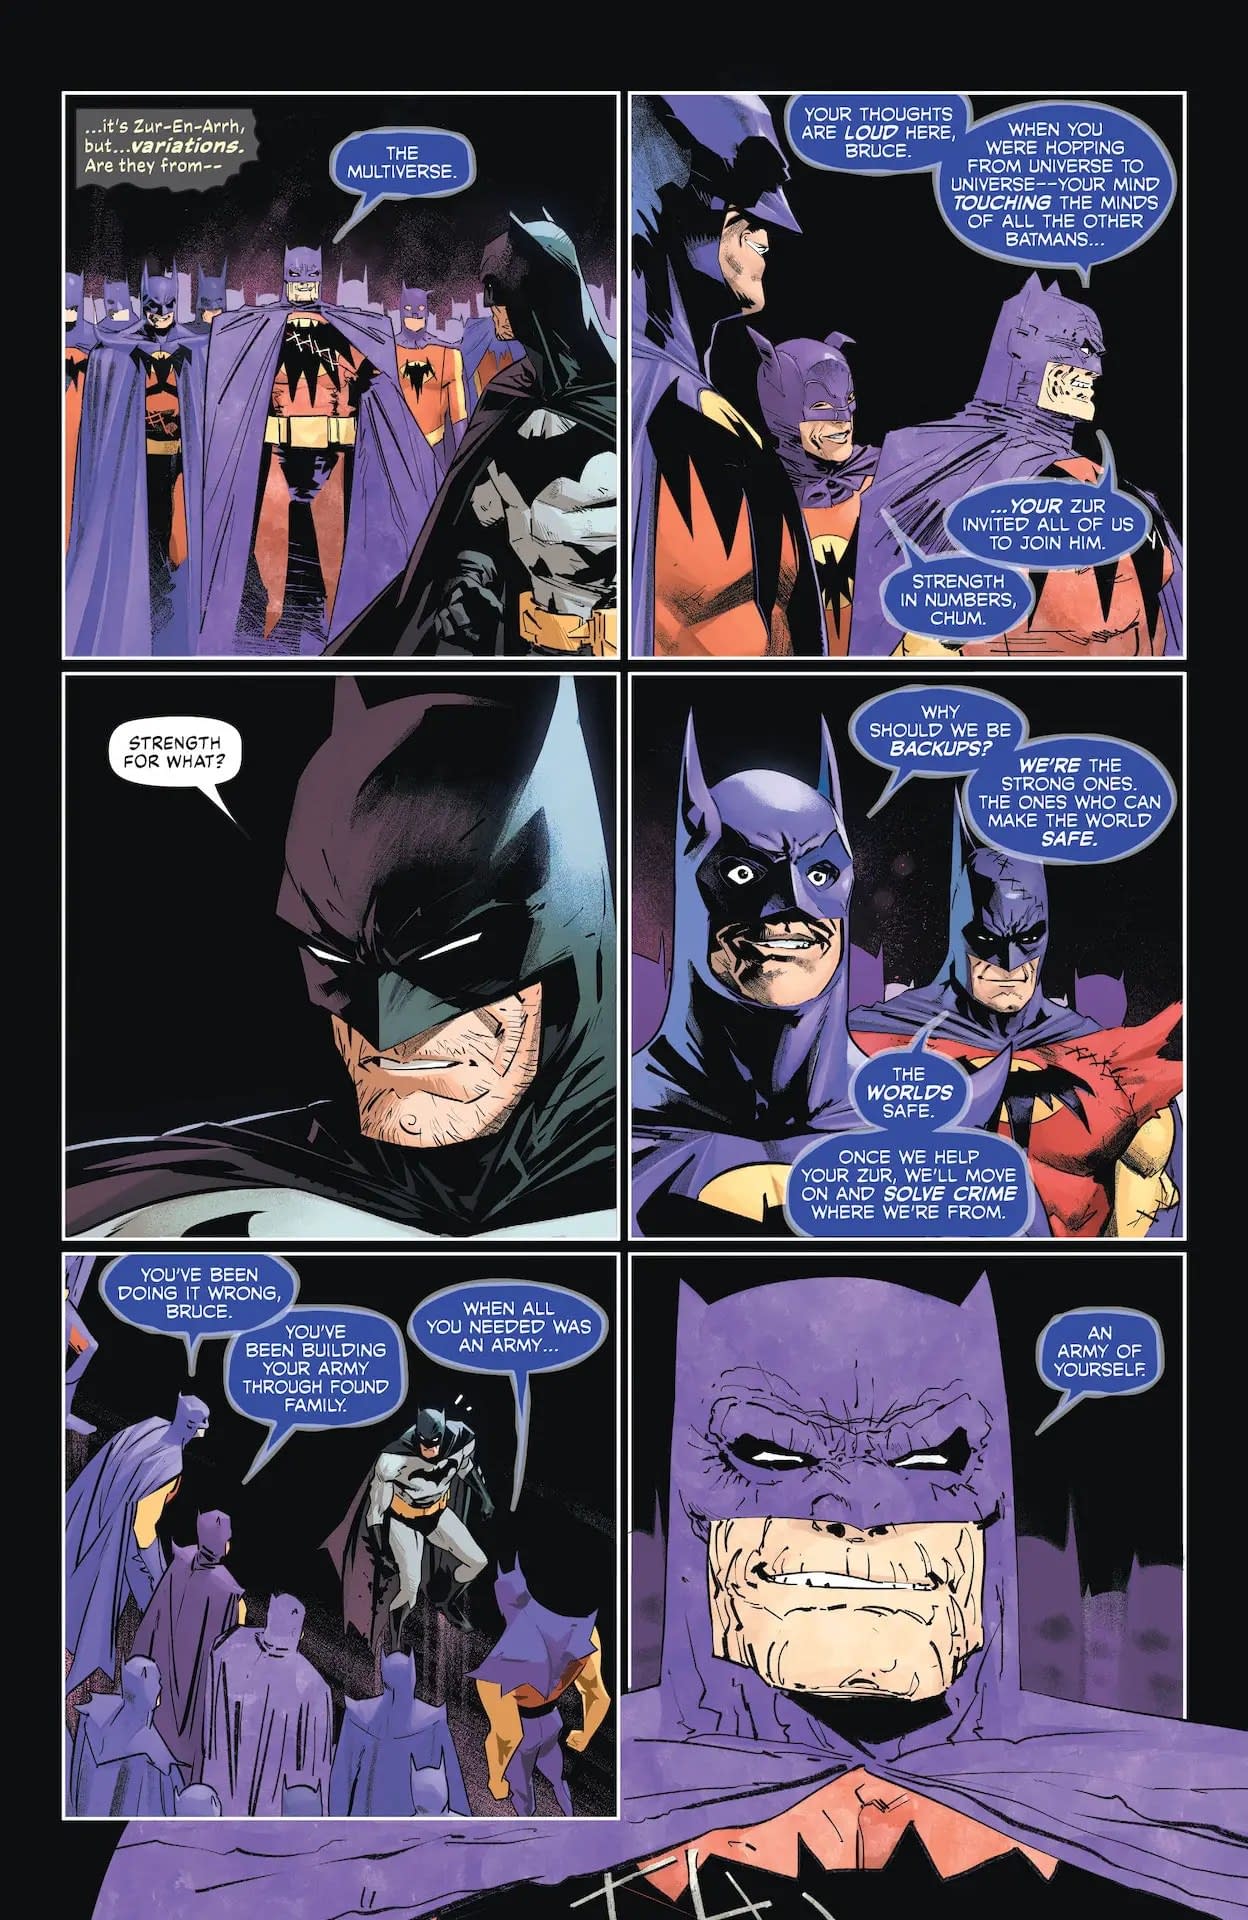 Batman #140 Preview: Batman vs. The Joker vs. More Batmen